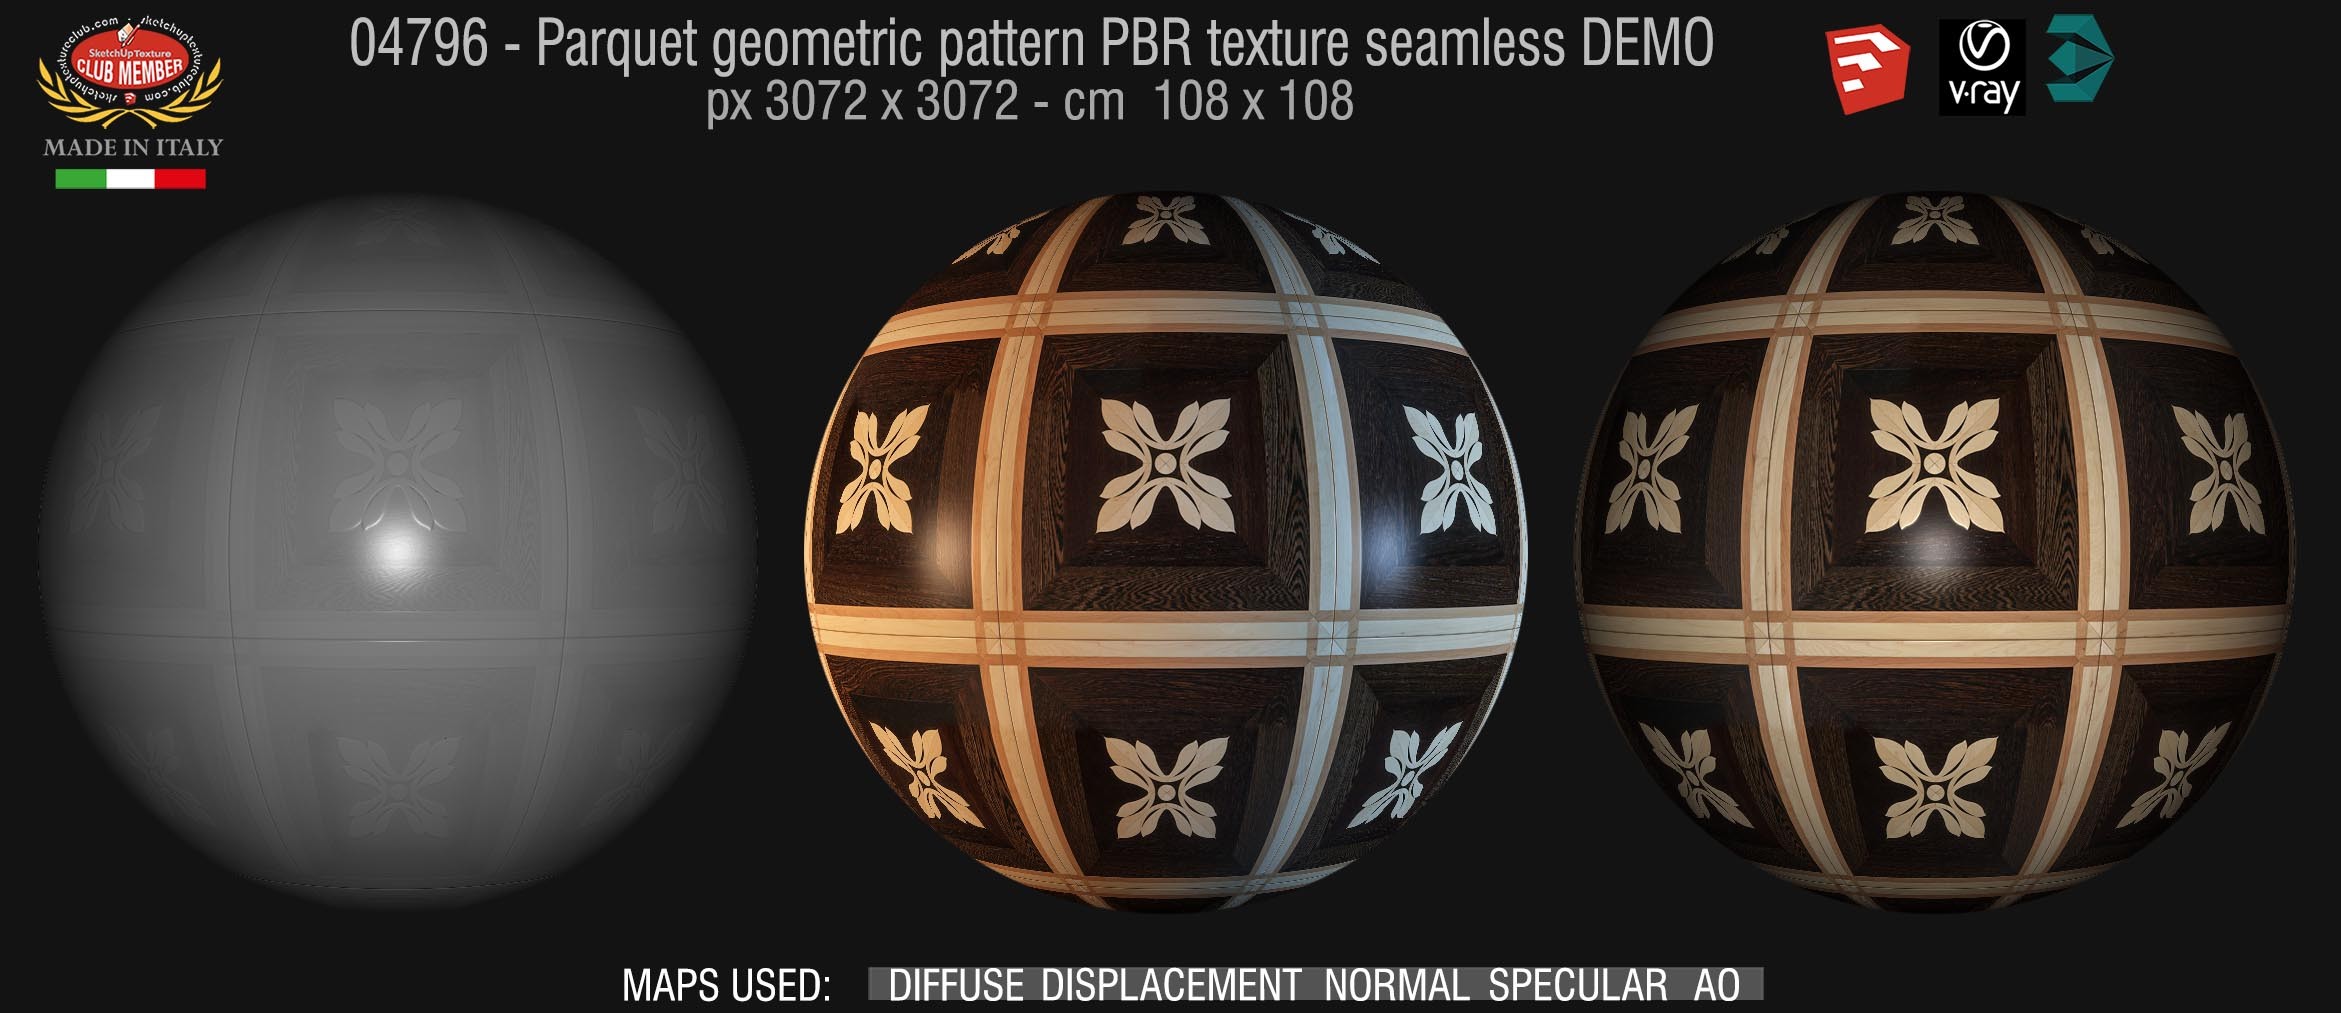 04796 Parquet geometric pattern PBR texture seamless DEMO